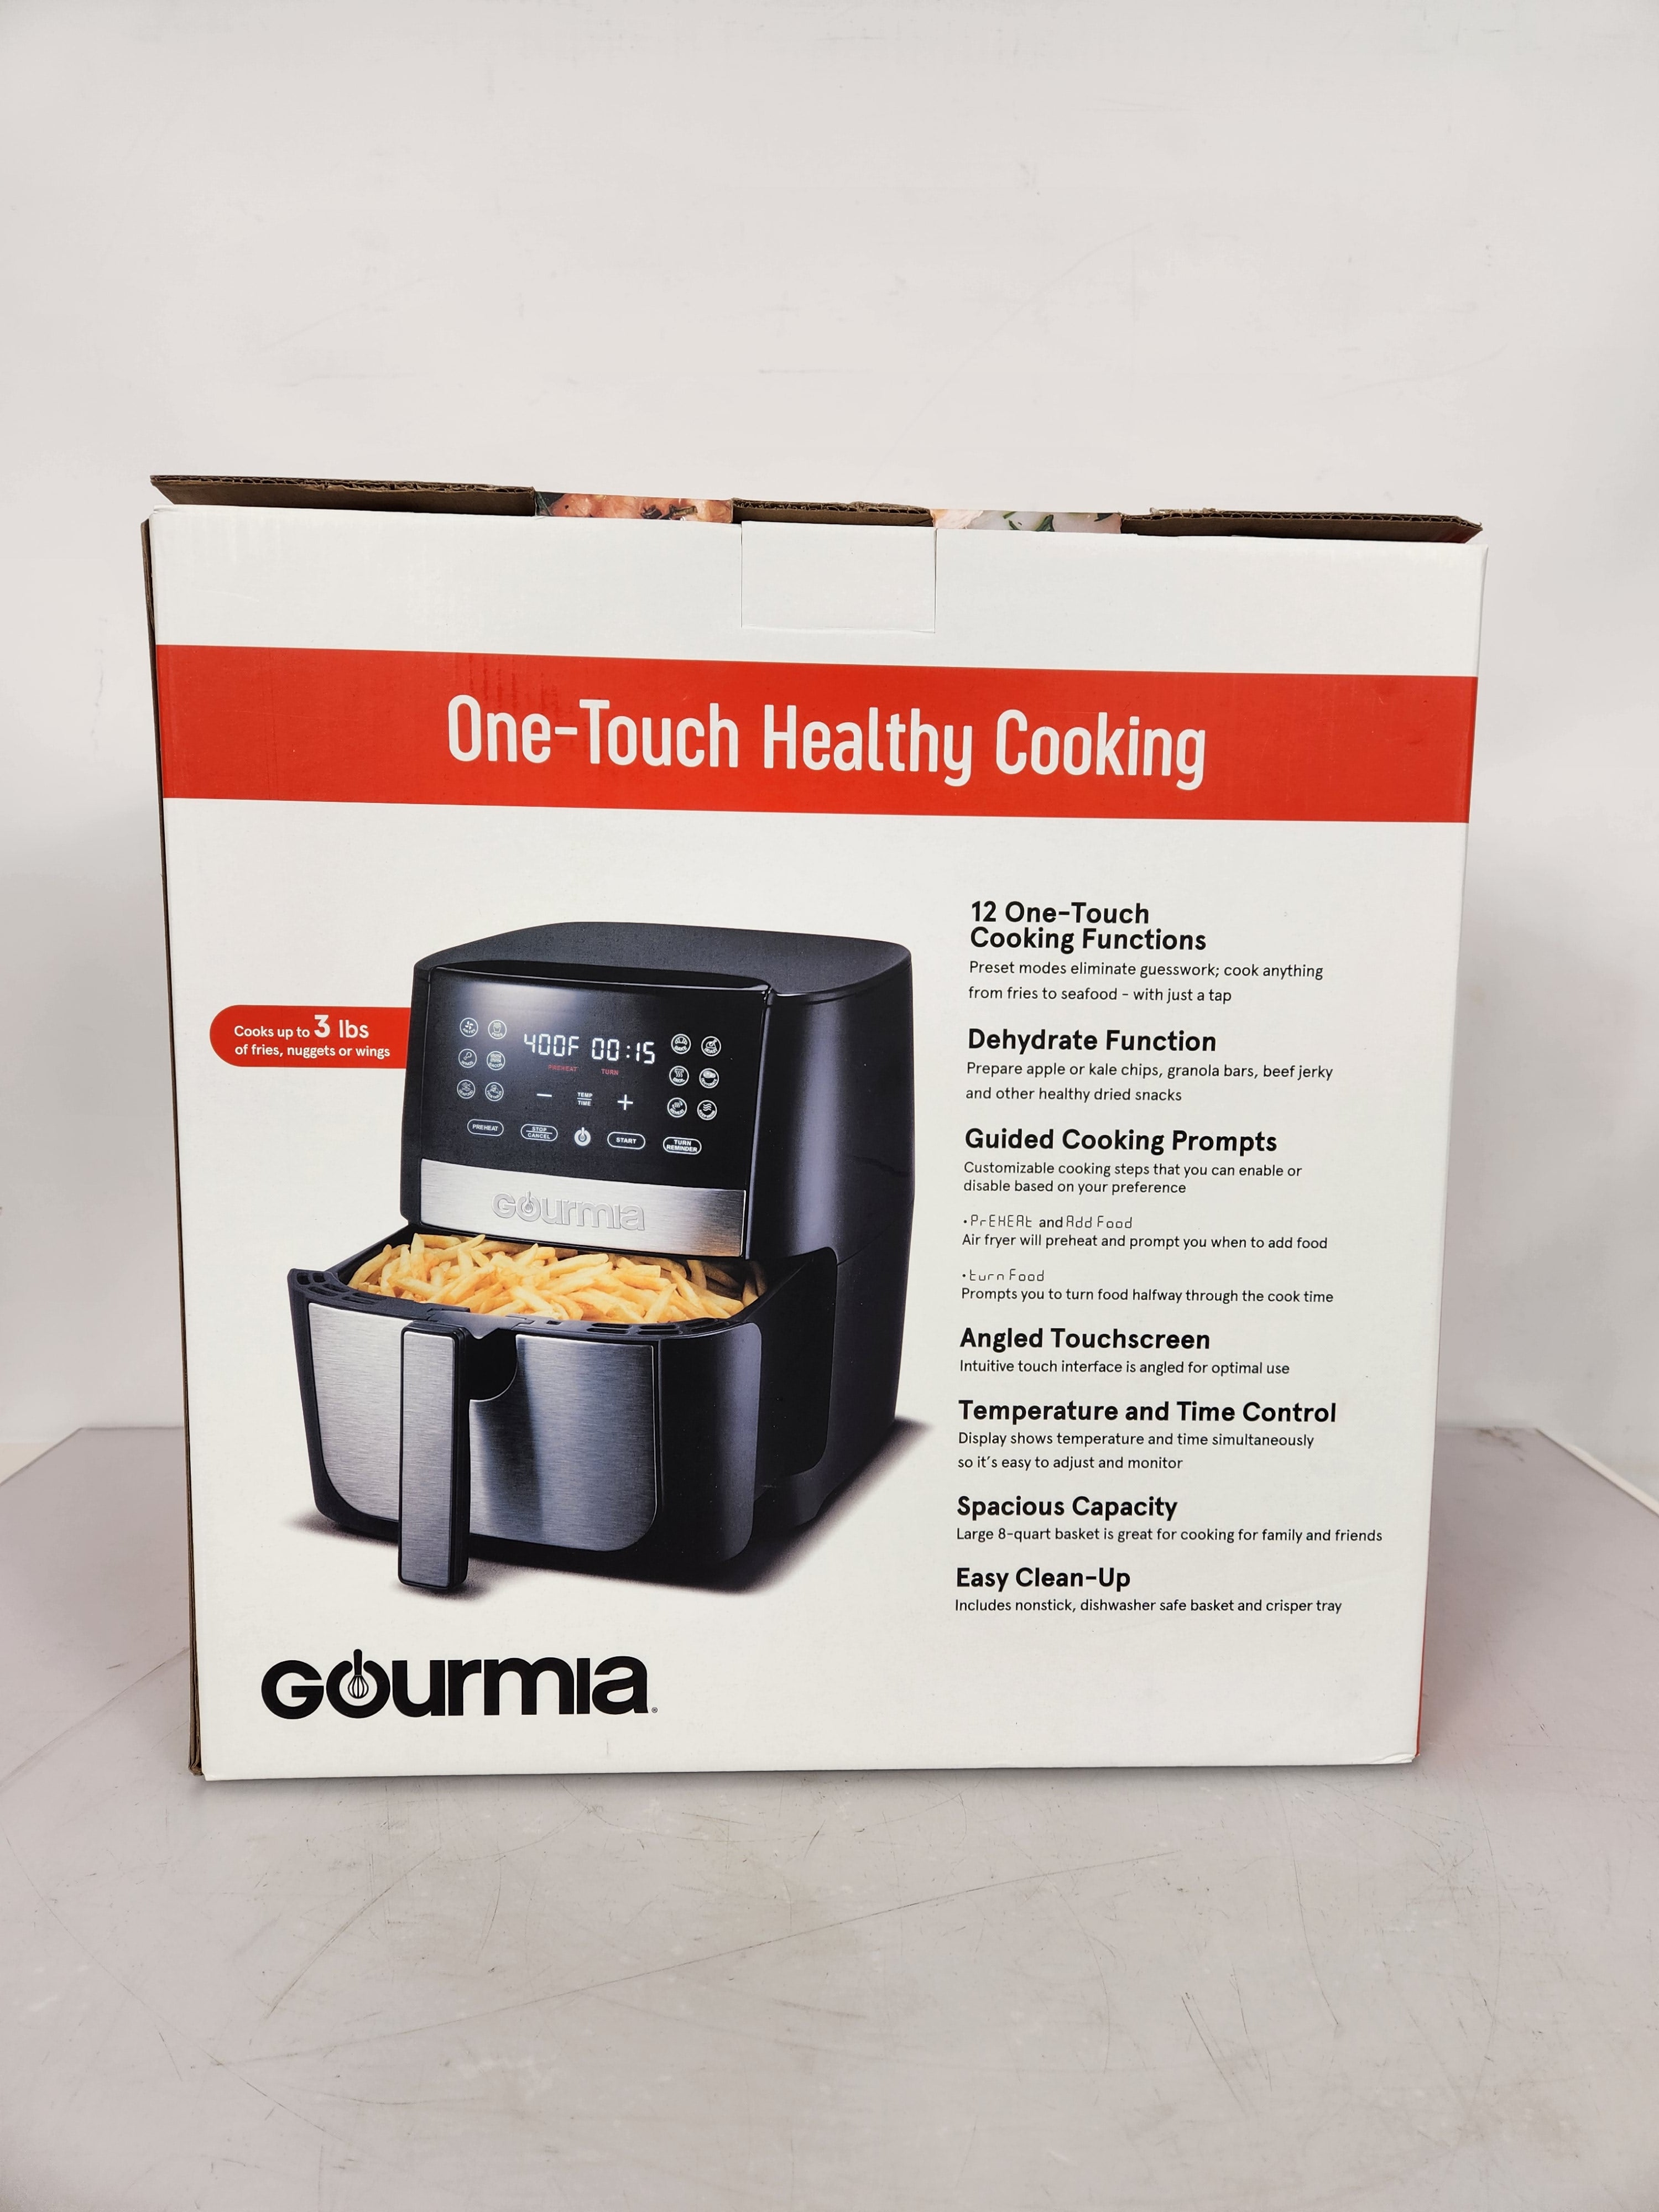 Gourmia Digital Air Fryer